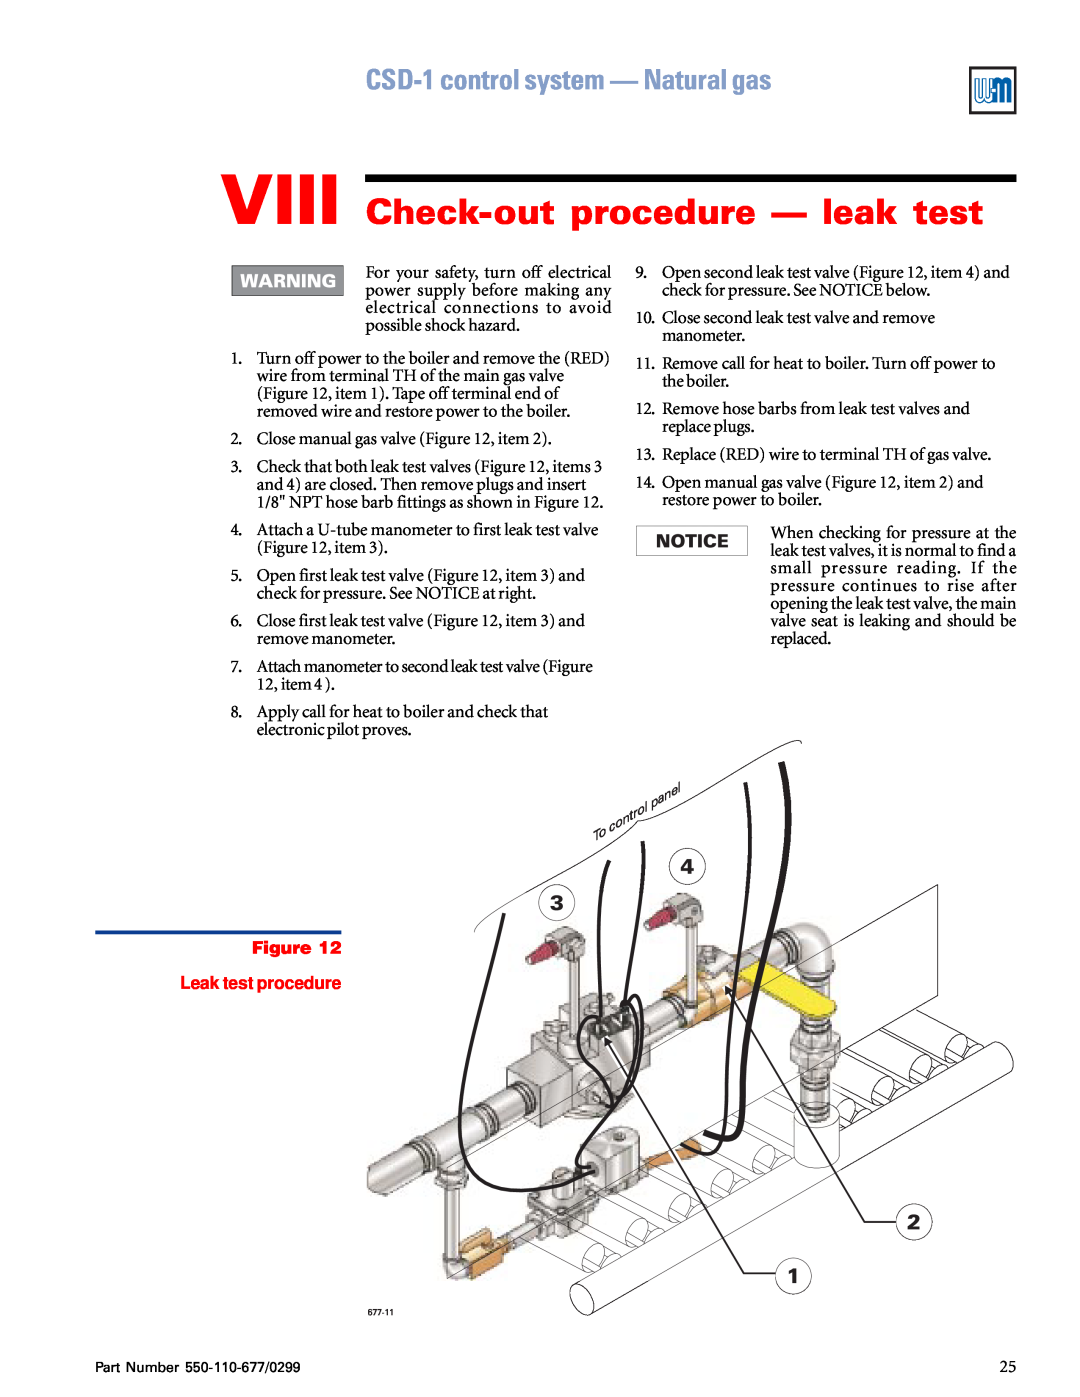 Weil-McLain EGH-125 VIII Check-outprocedure - leak test, CSD-1control system - Natural gas, Figure Leak test procedure 